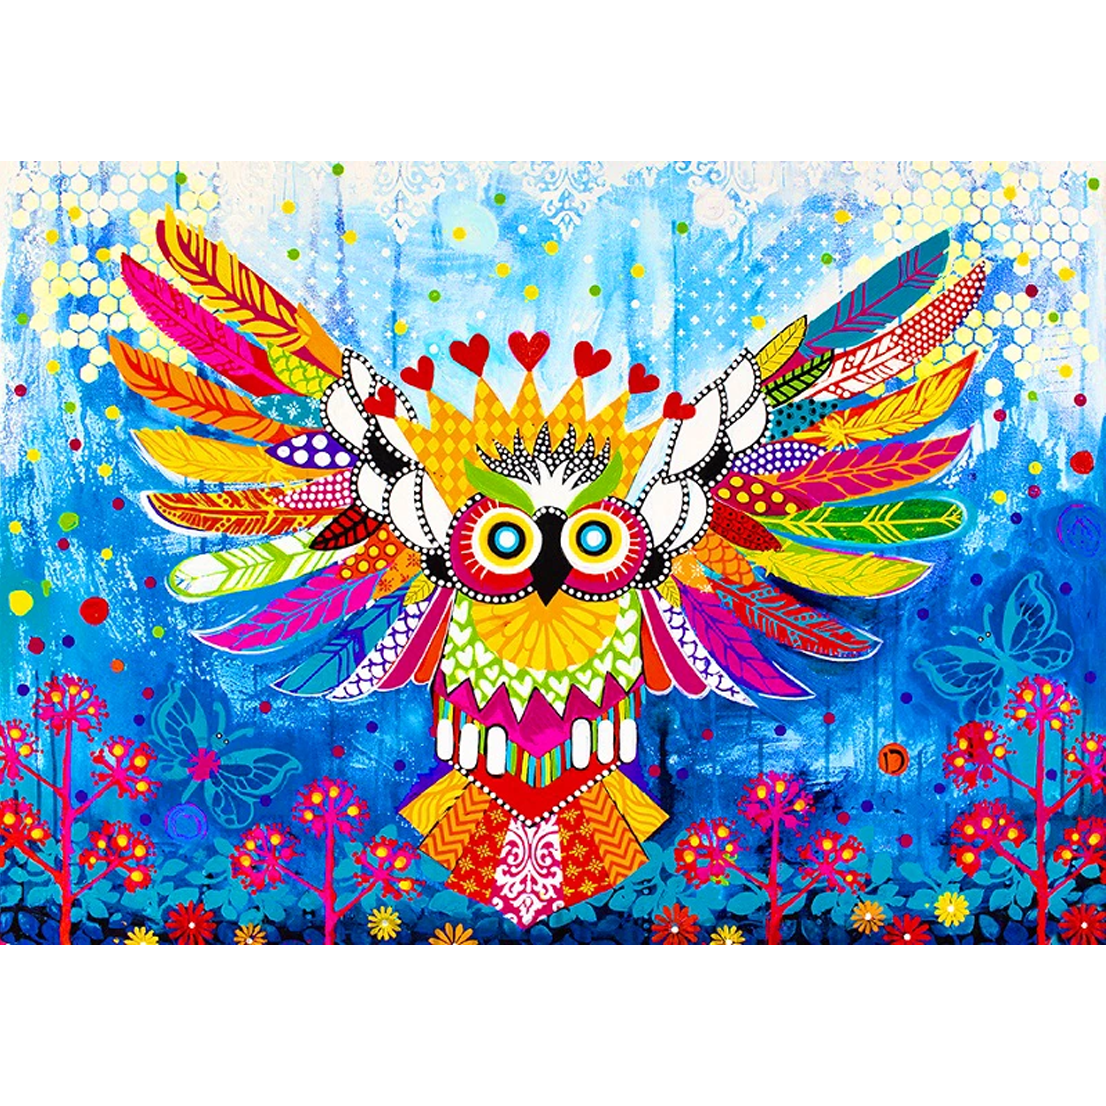 Wall Art Framed Print - Hedwig - Owl